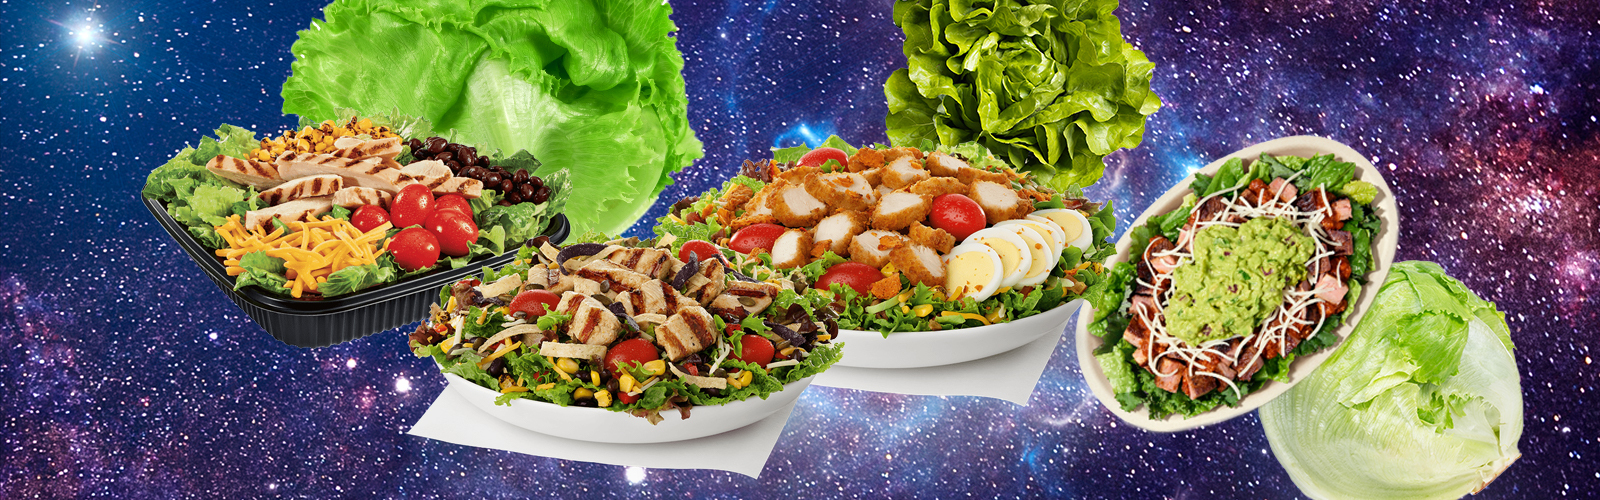 salads-tf-uproxx.jpg